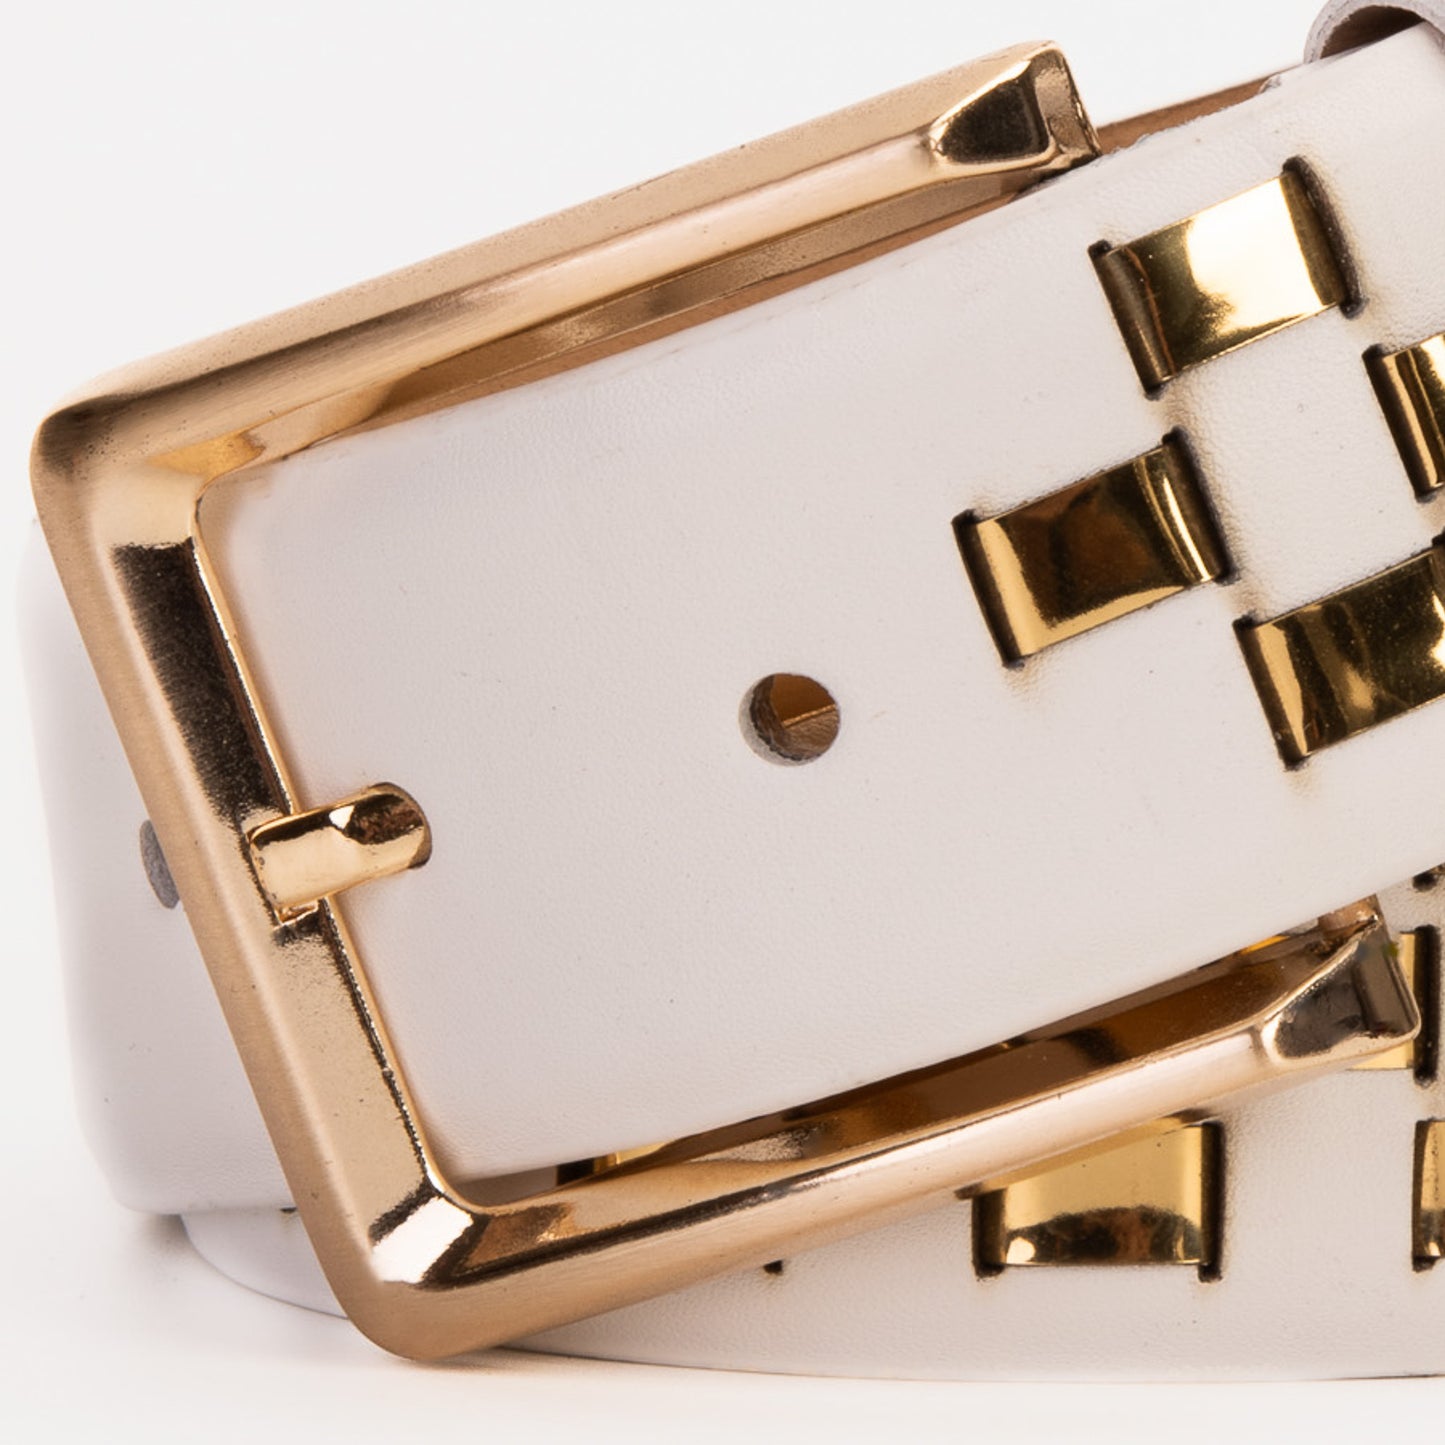 The Mackenzie White & Gold Woven Leather Belt